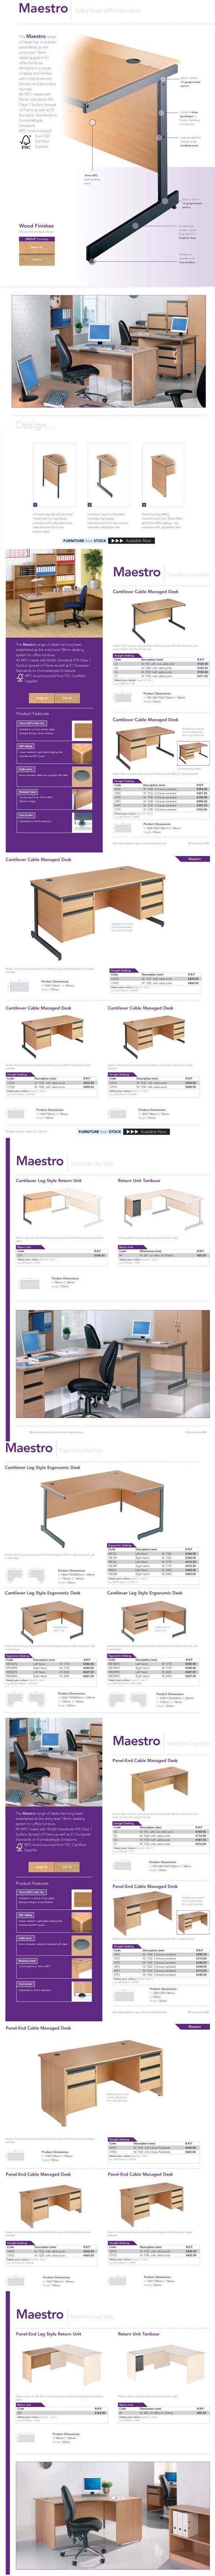 maesto office furniture